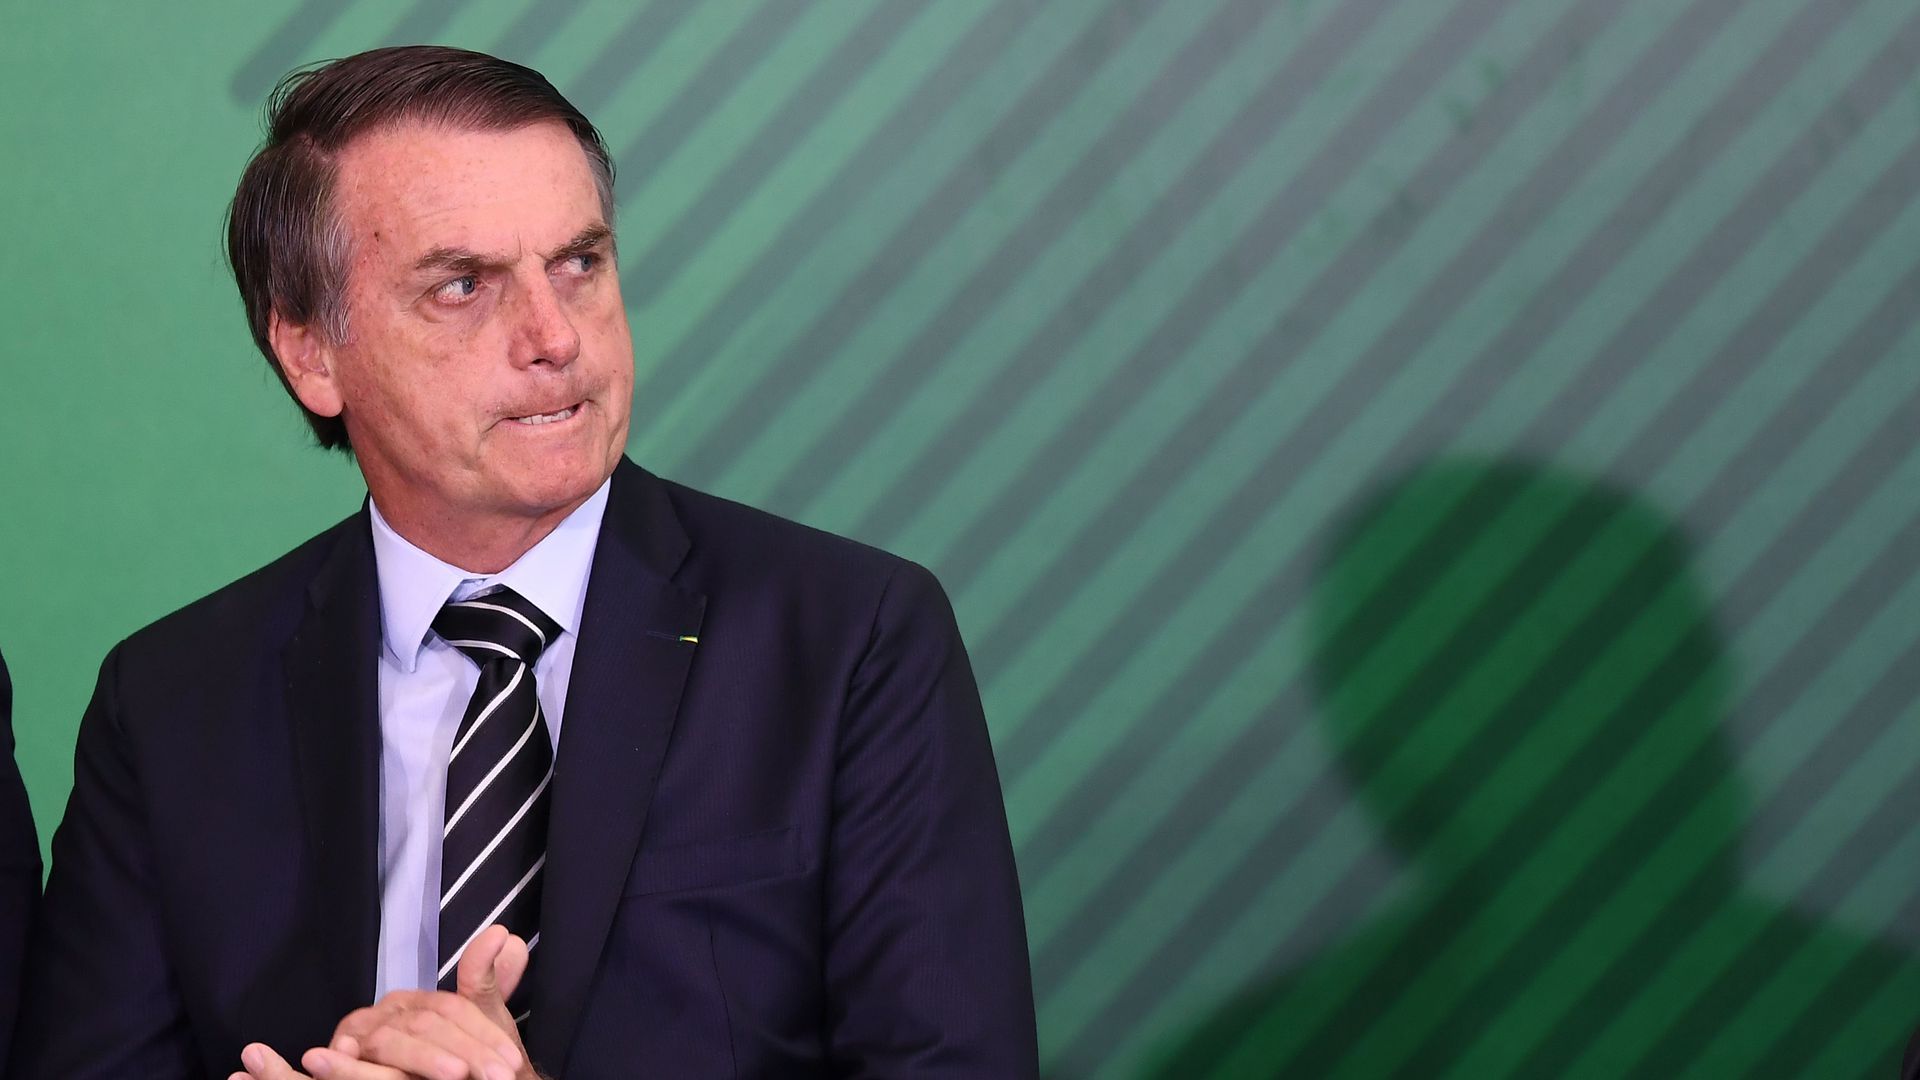 Jair Bolsonaro dodges questions on his sexist, homophobic history